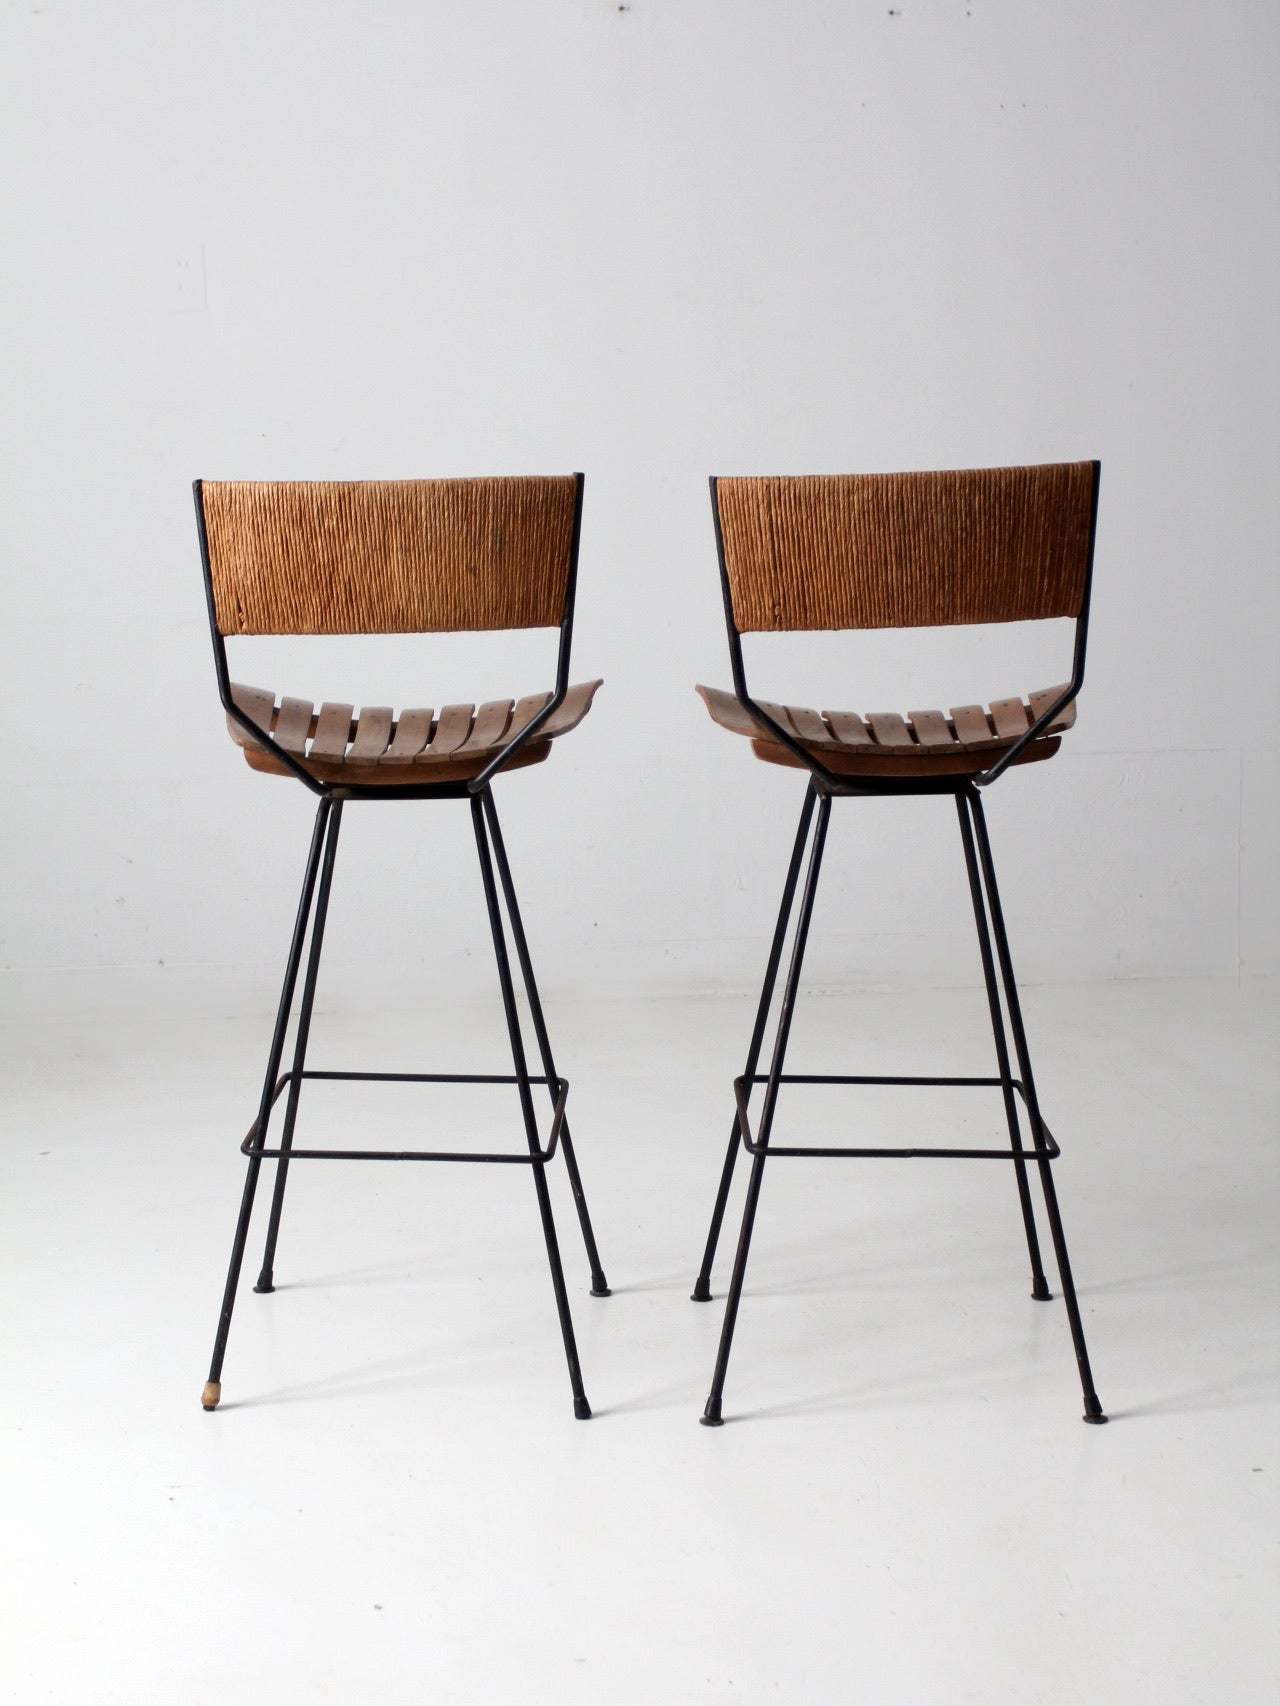 mid-century stools